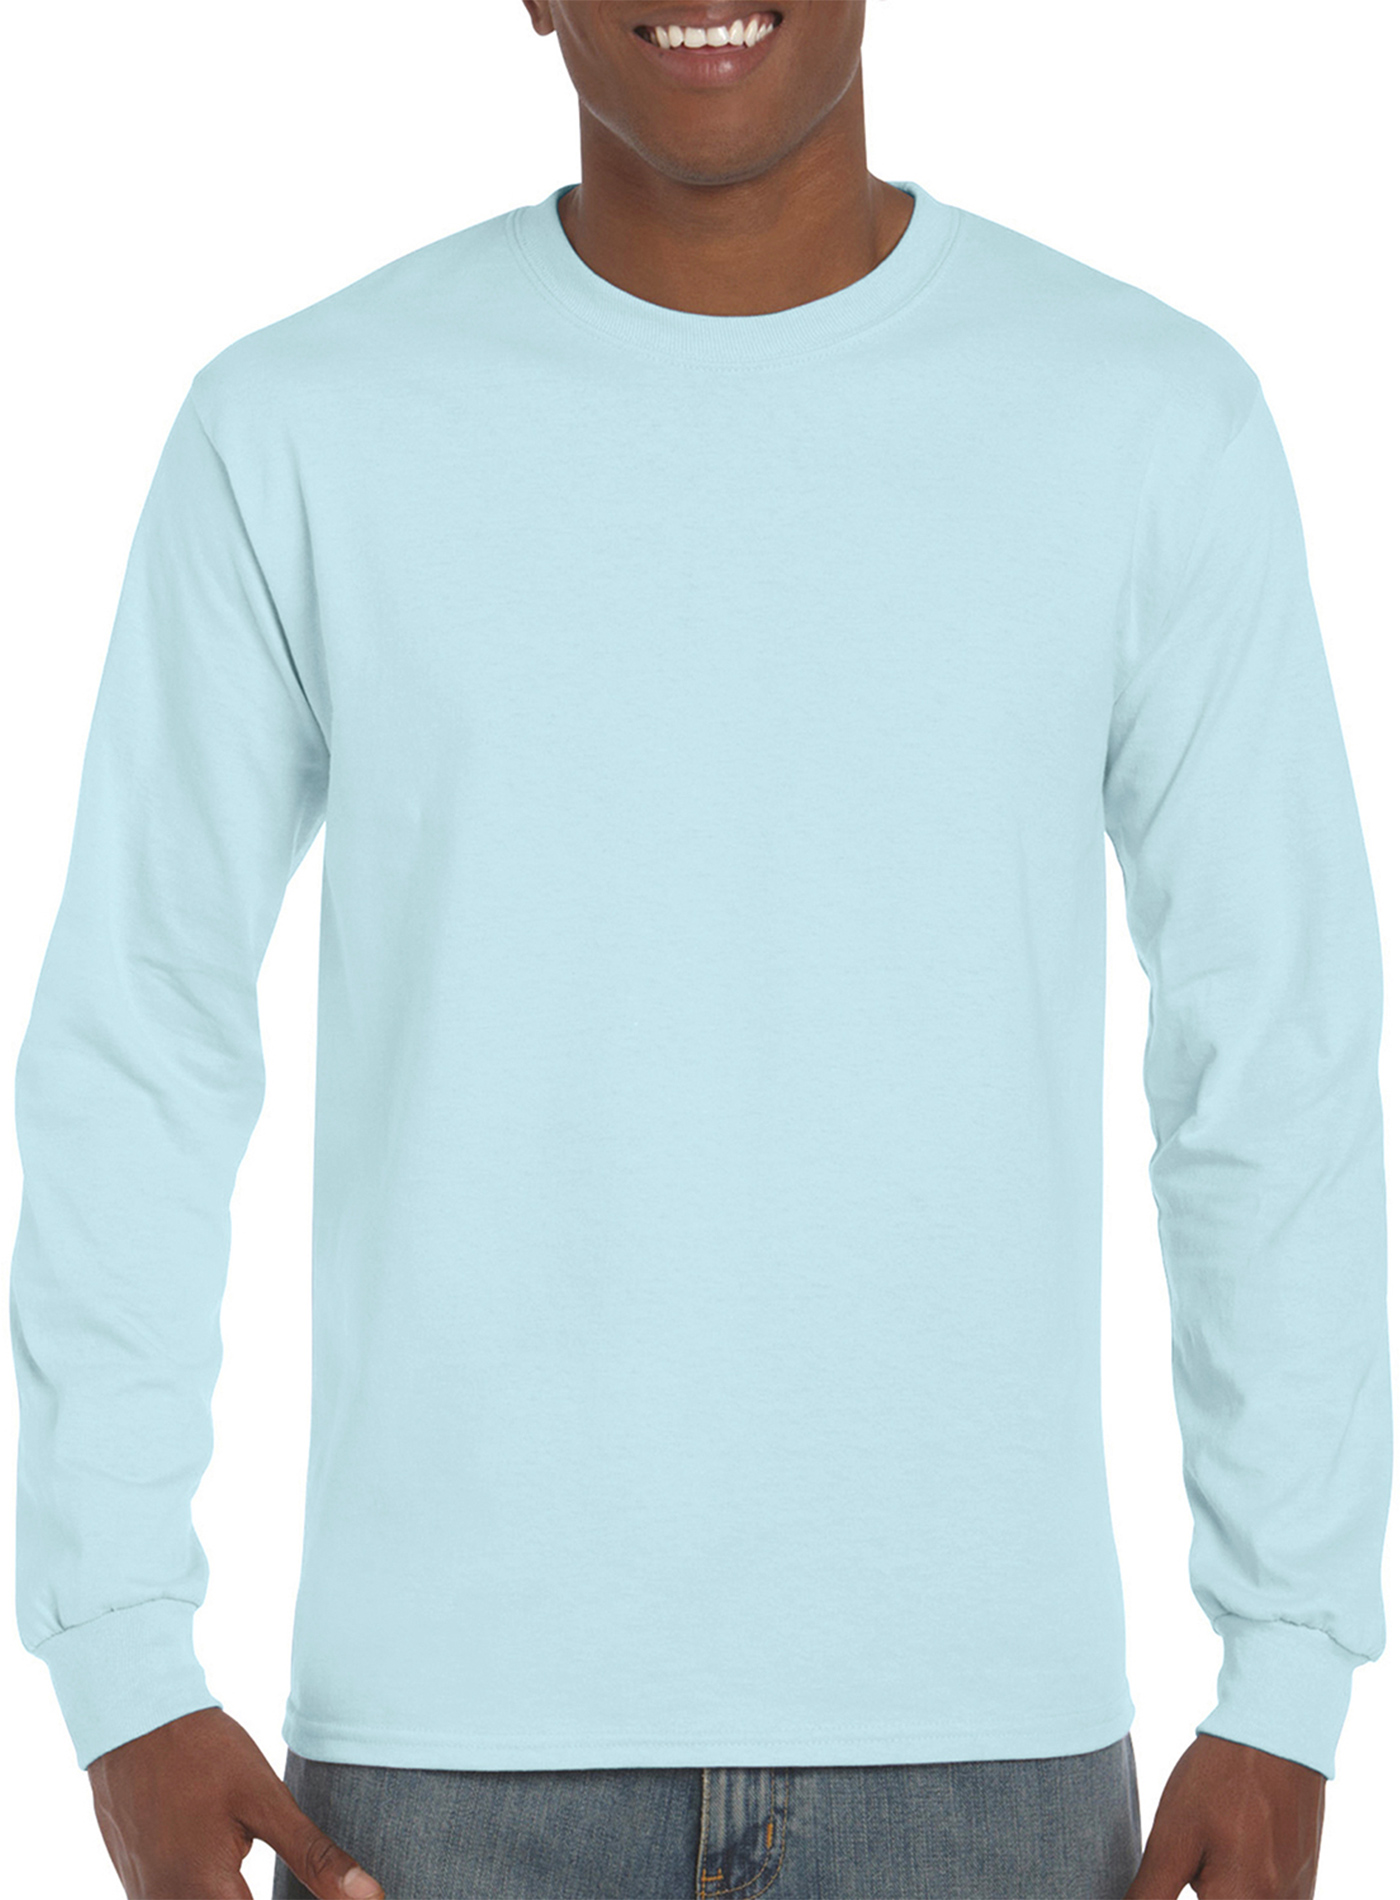 Pánské tričko s dlouhým rukávem Gildan Hammer - Blankytně modrá 5XL